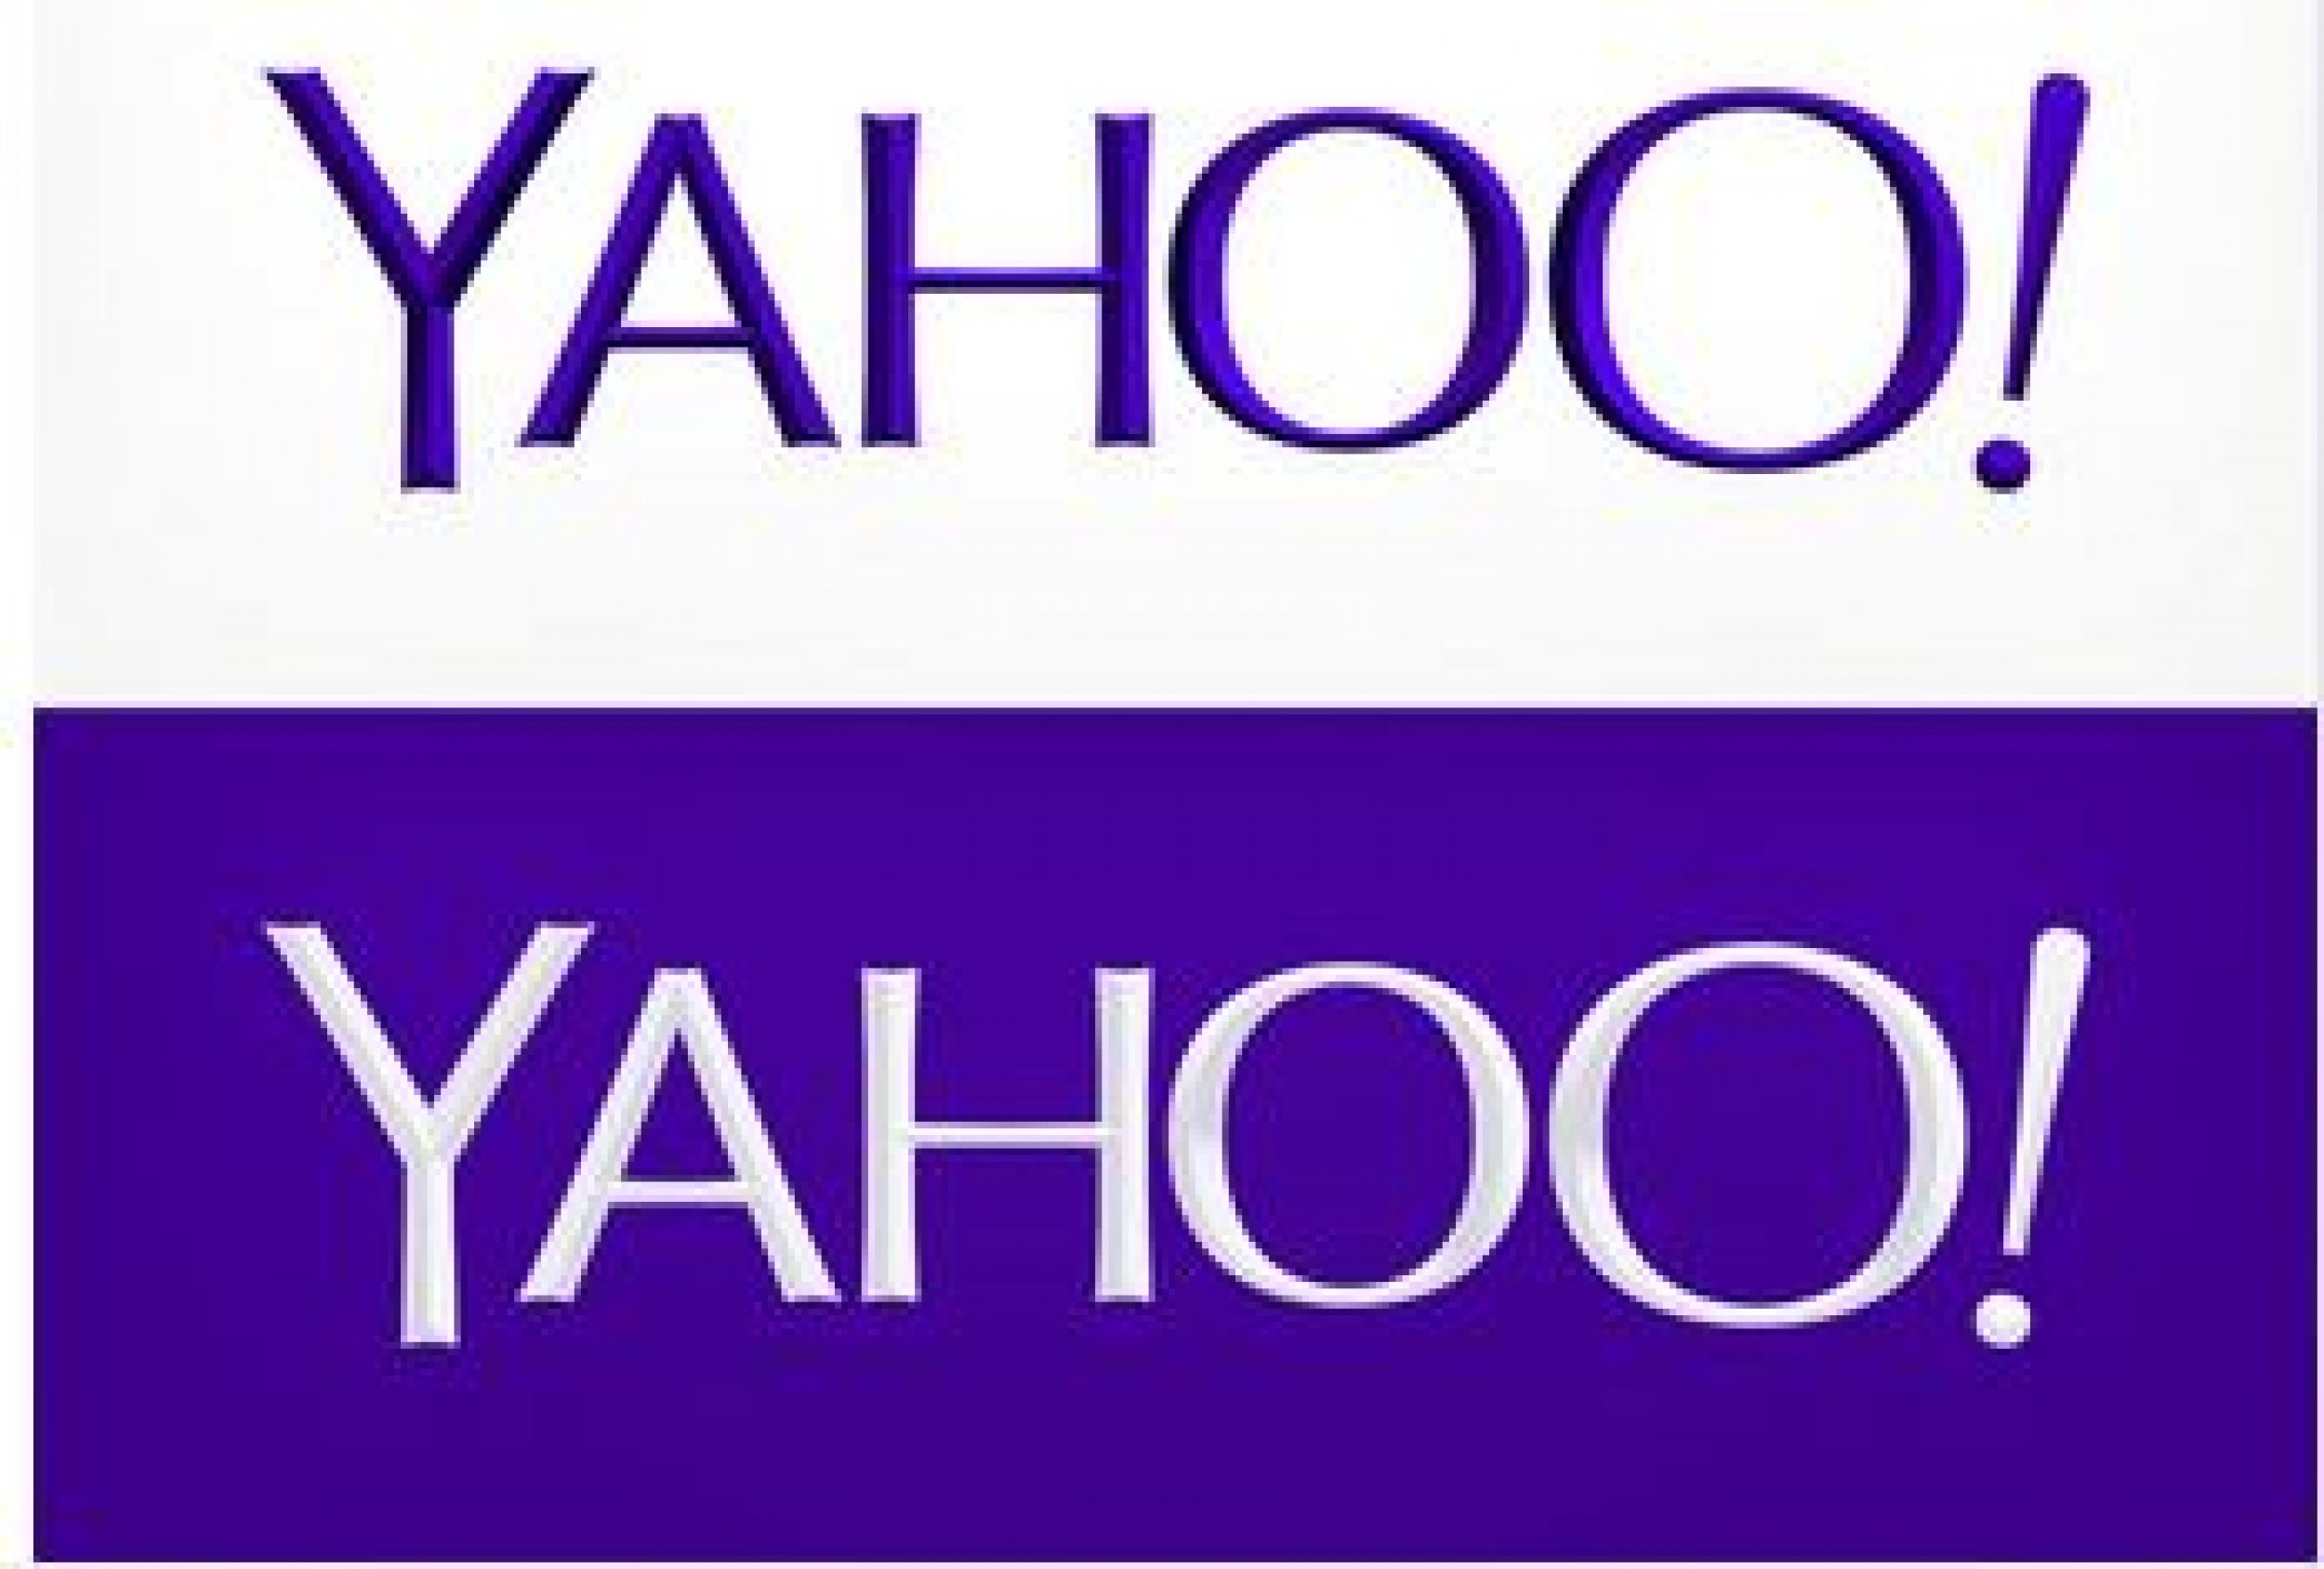 New Yahoo Logo Over 66 Percent Of People Prefer Original Yahoo Logo